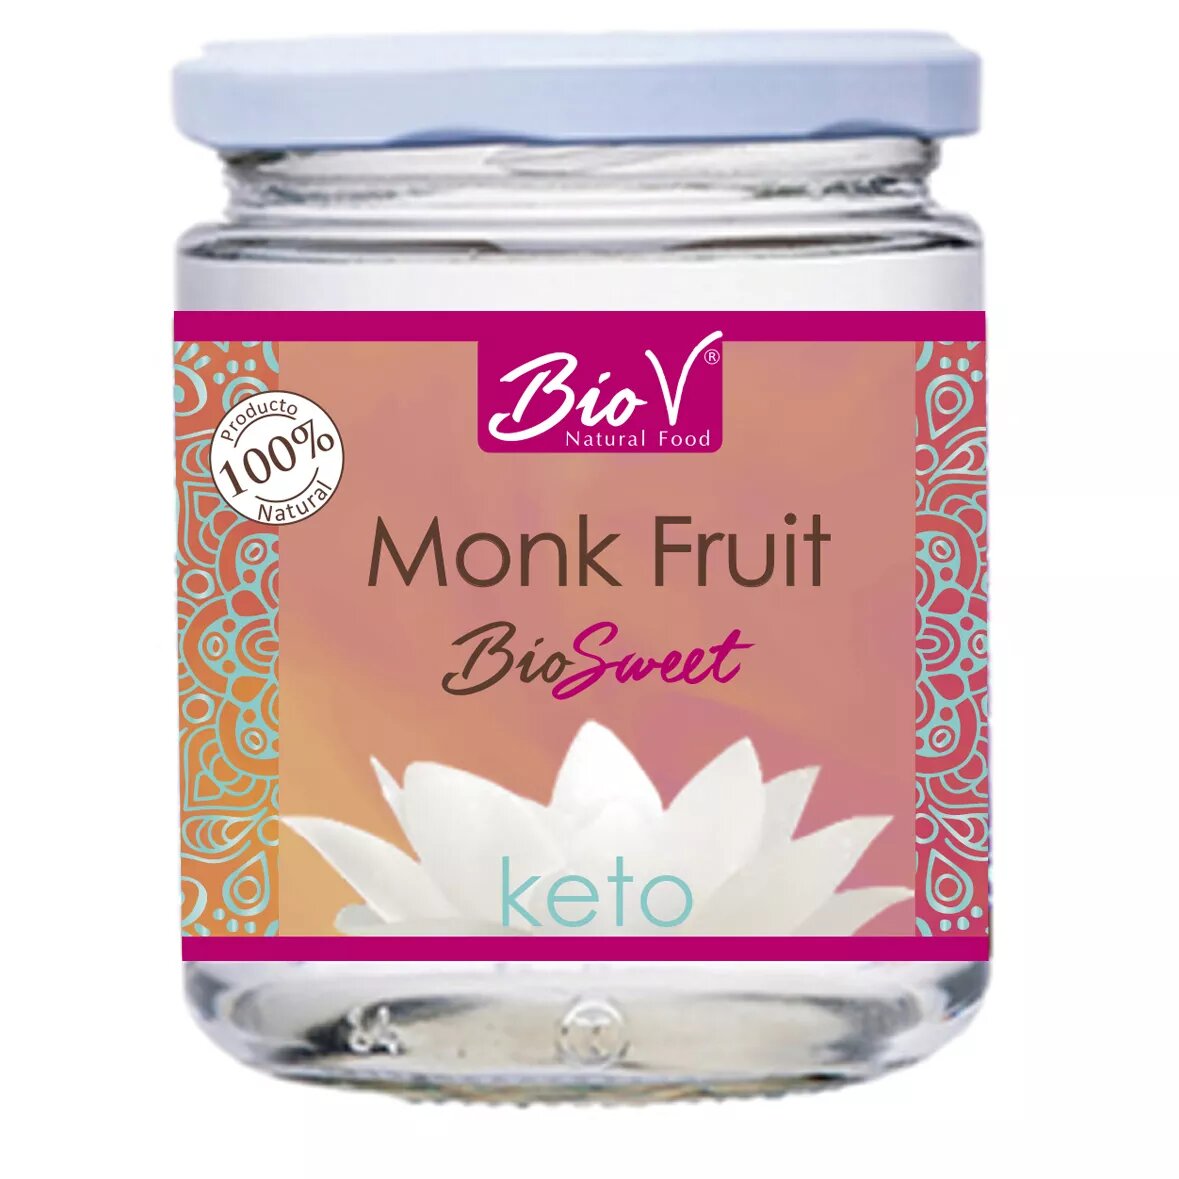 Monk Fruit Blend (Fruto del Monje + Eritritol), 300 grs. BioV